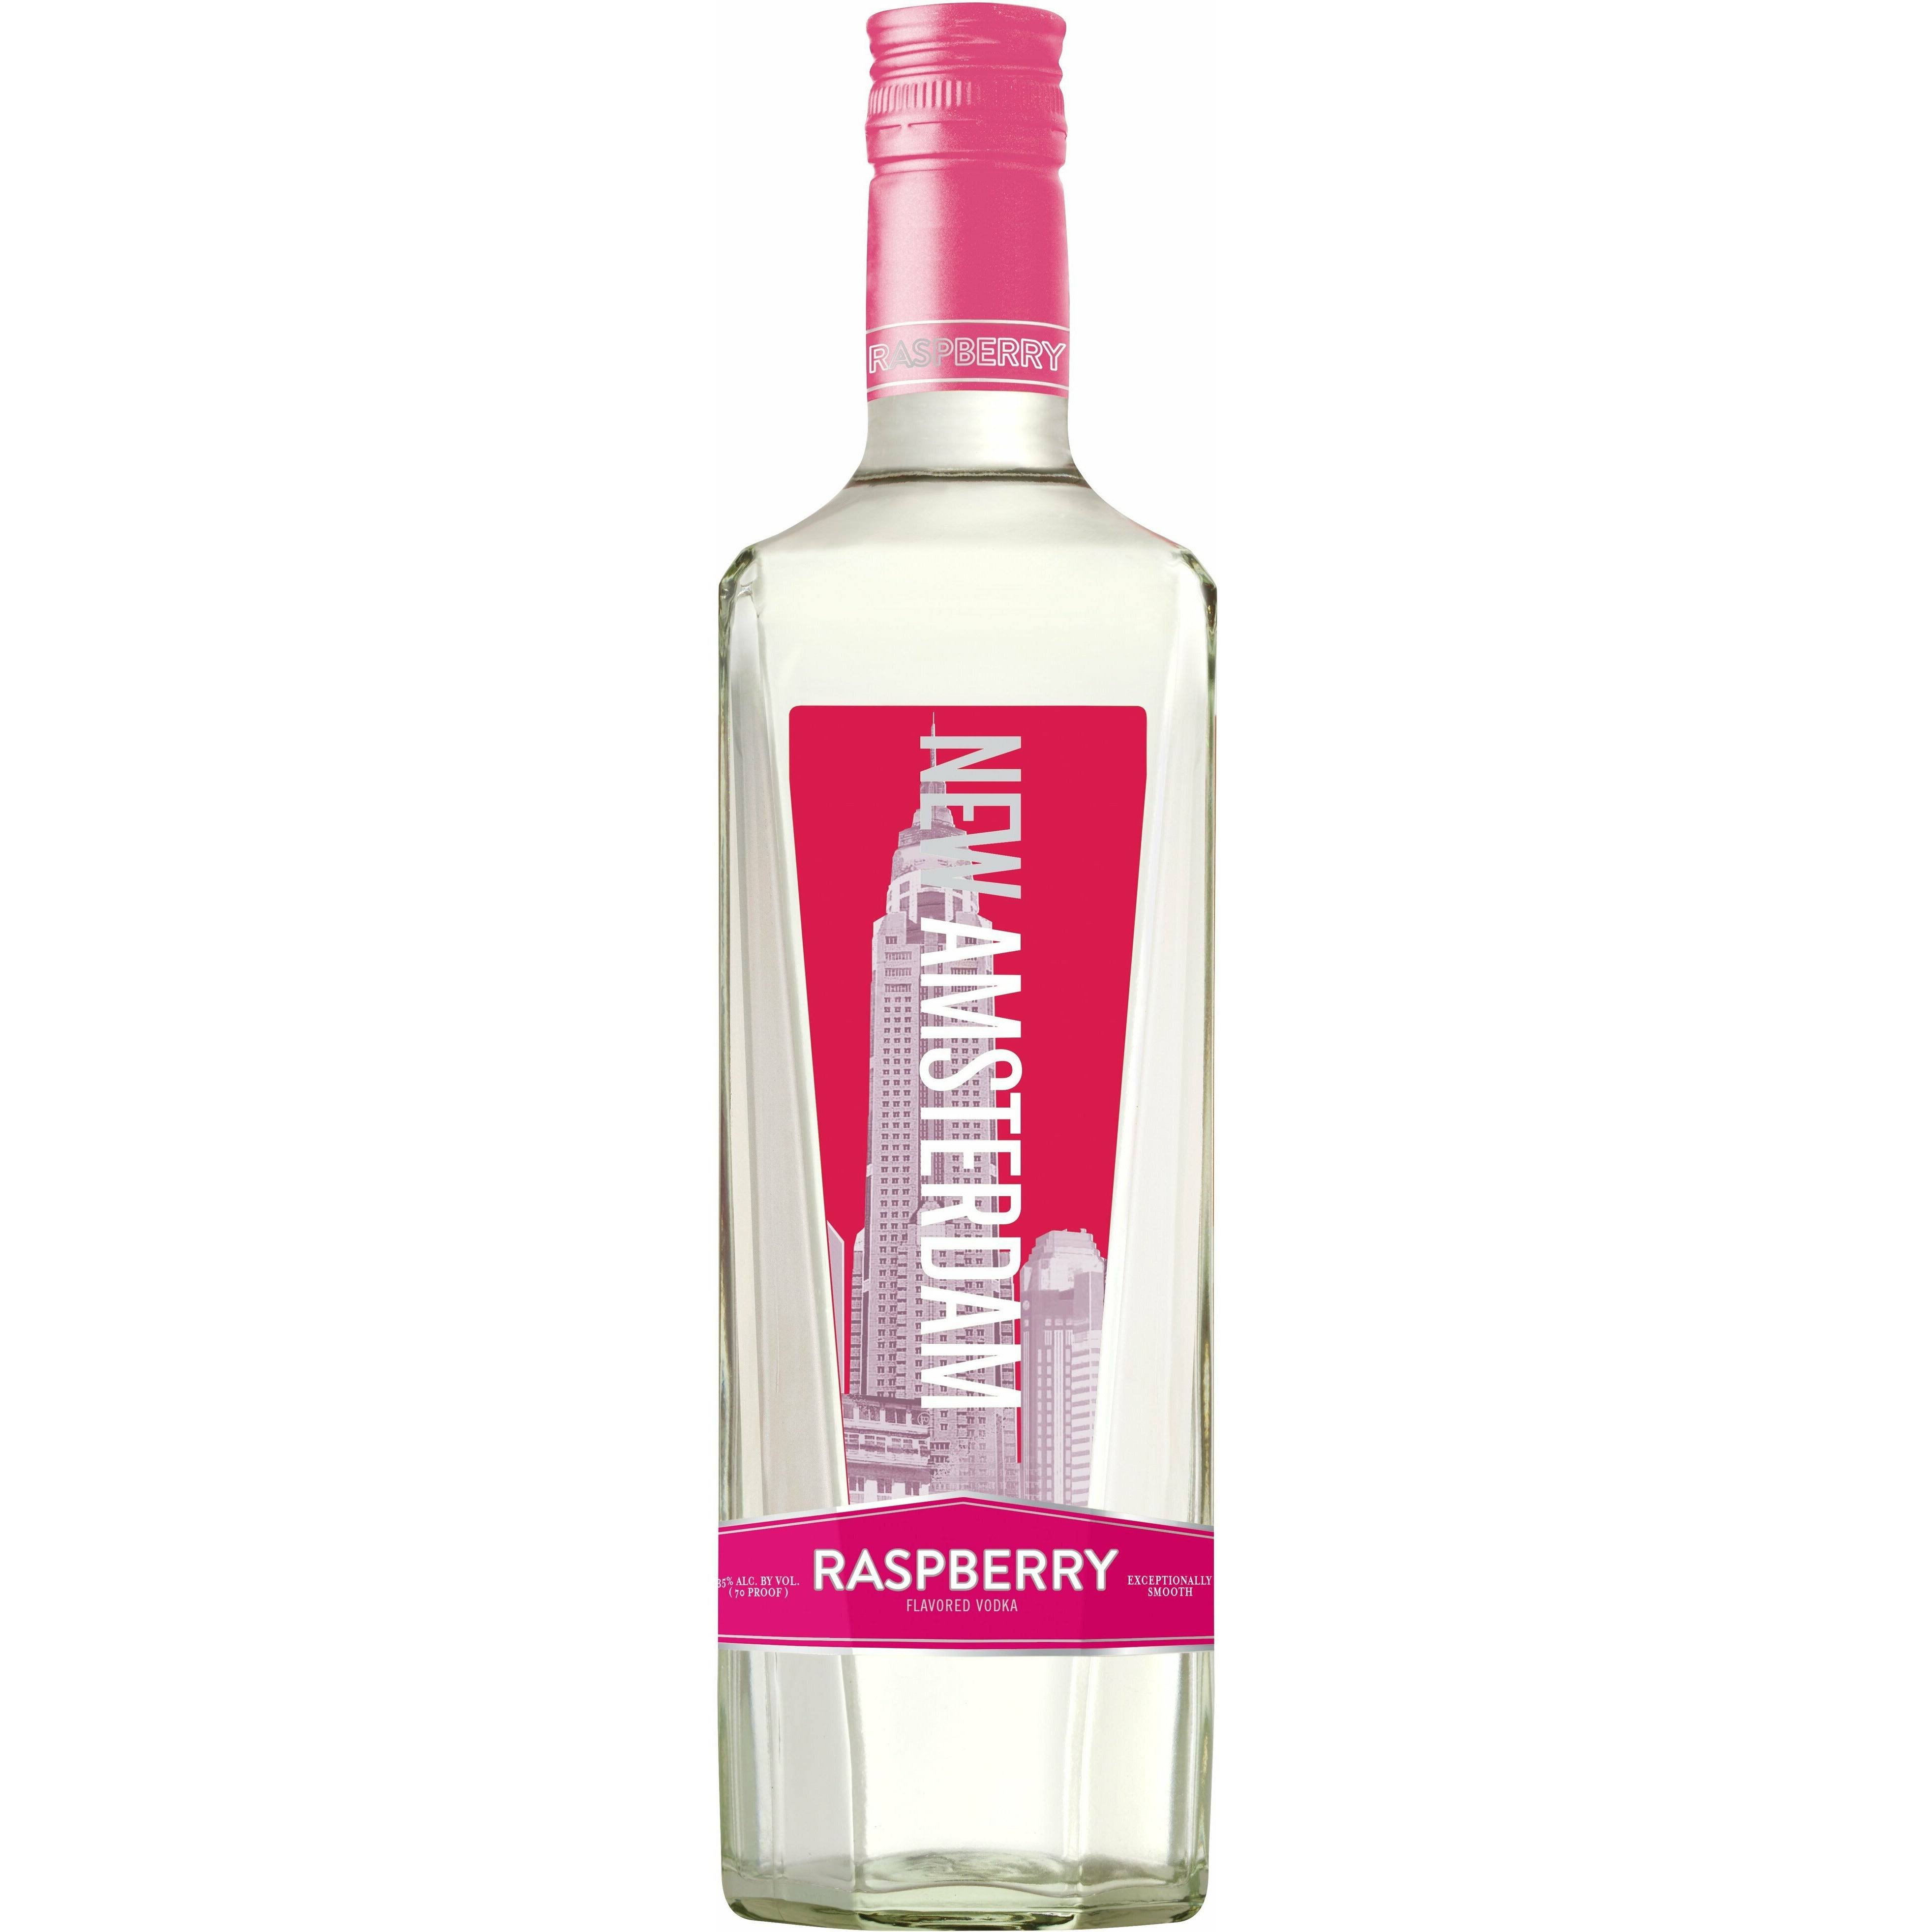 New Amsterdam Vodka, Raspberry, Flavored - 750 ml